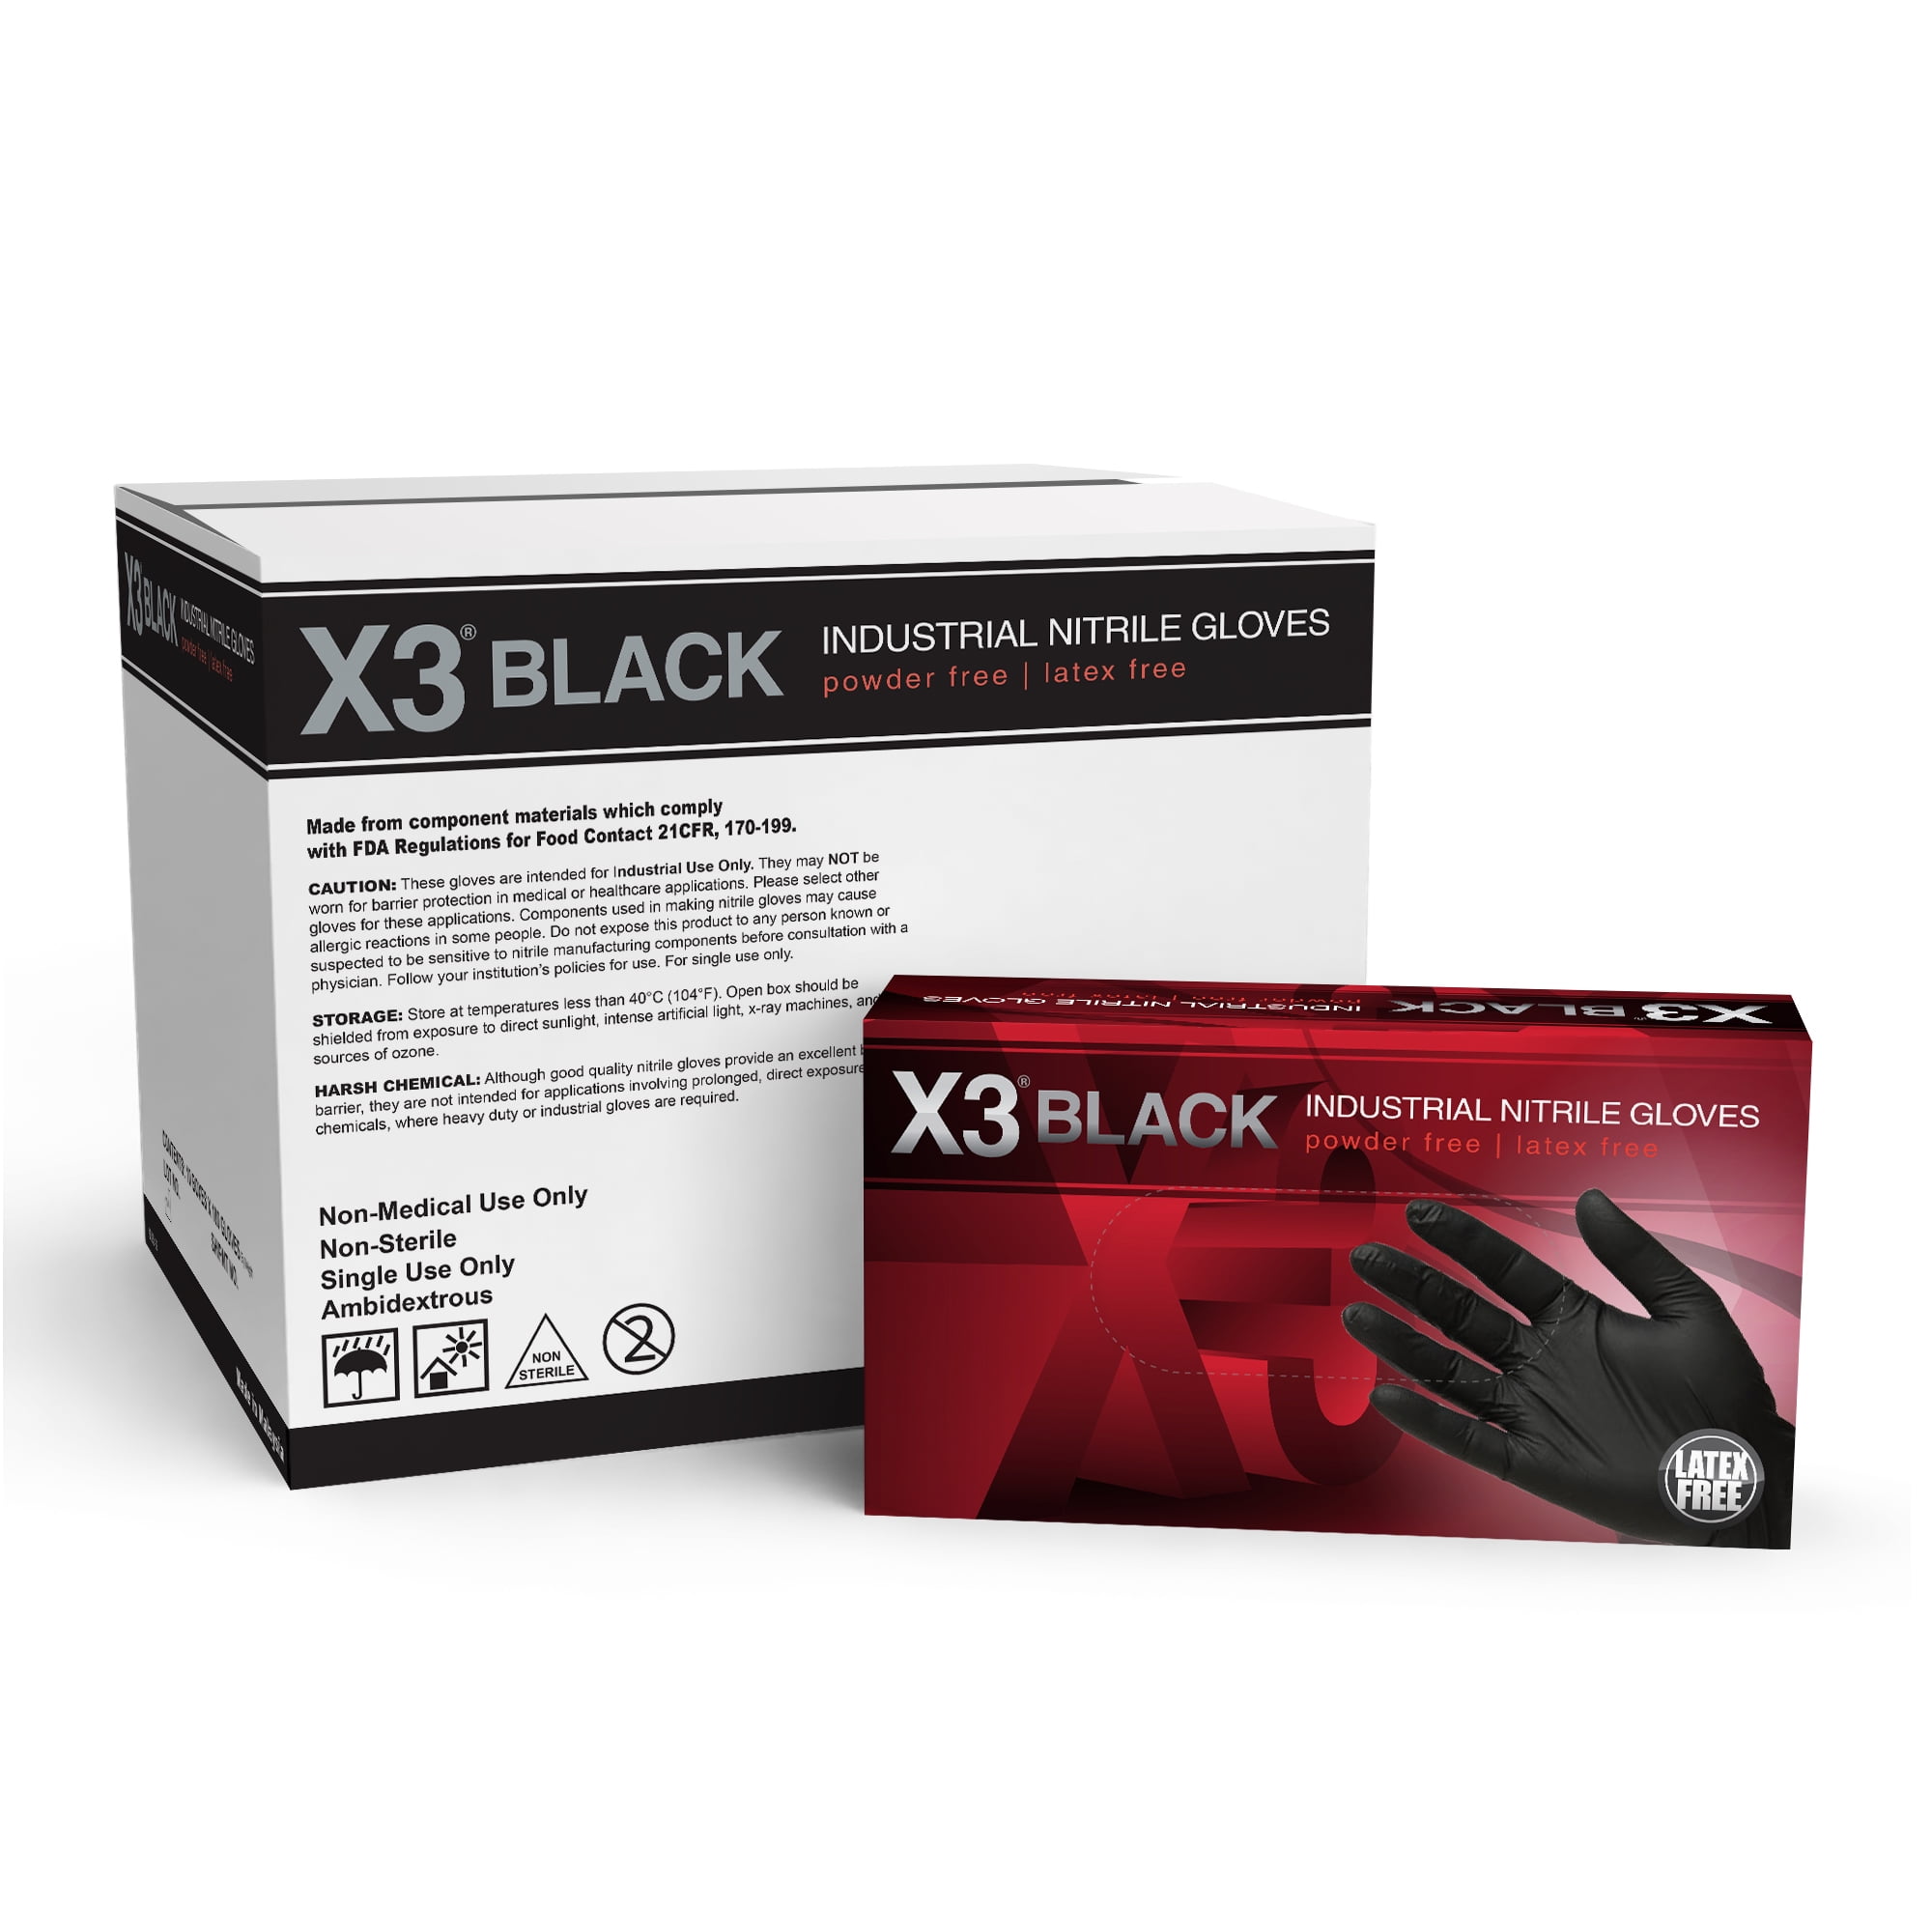 Black Lightning Powder & Latex Free Nitrile Gloves Medium CASE OF 1,000